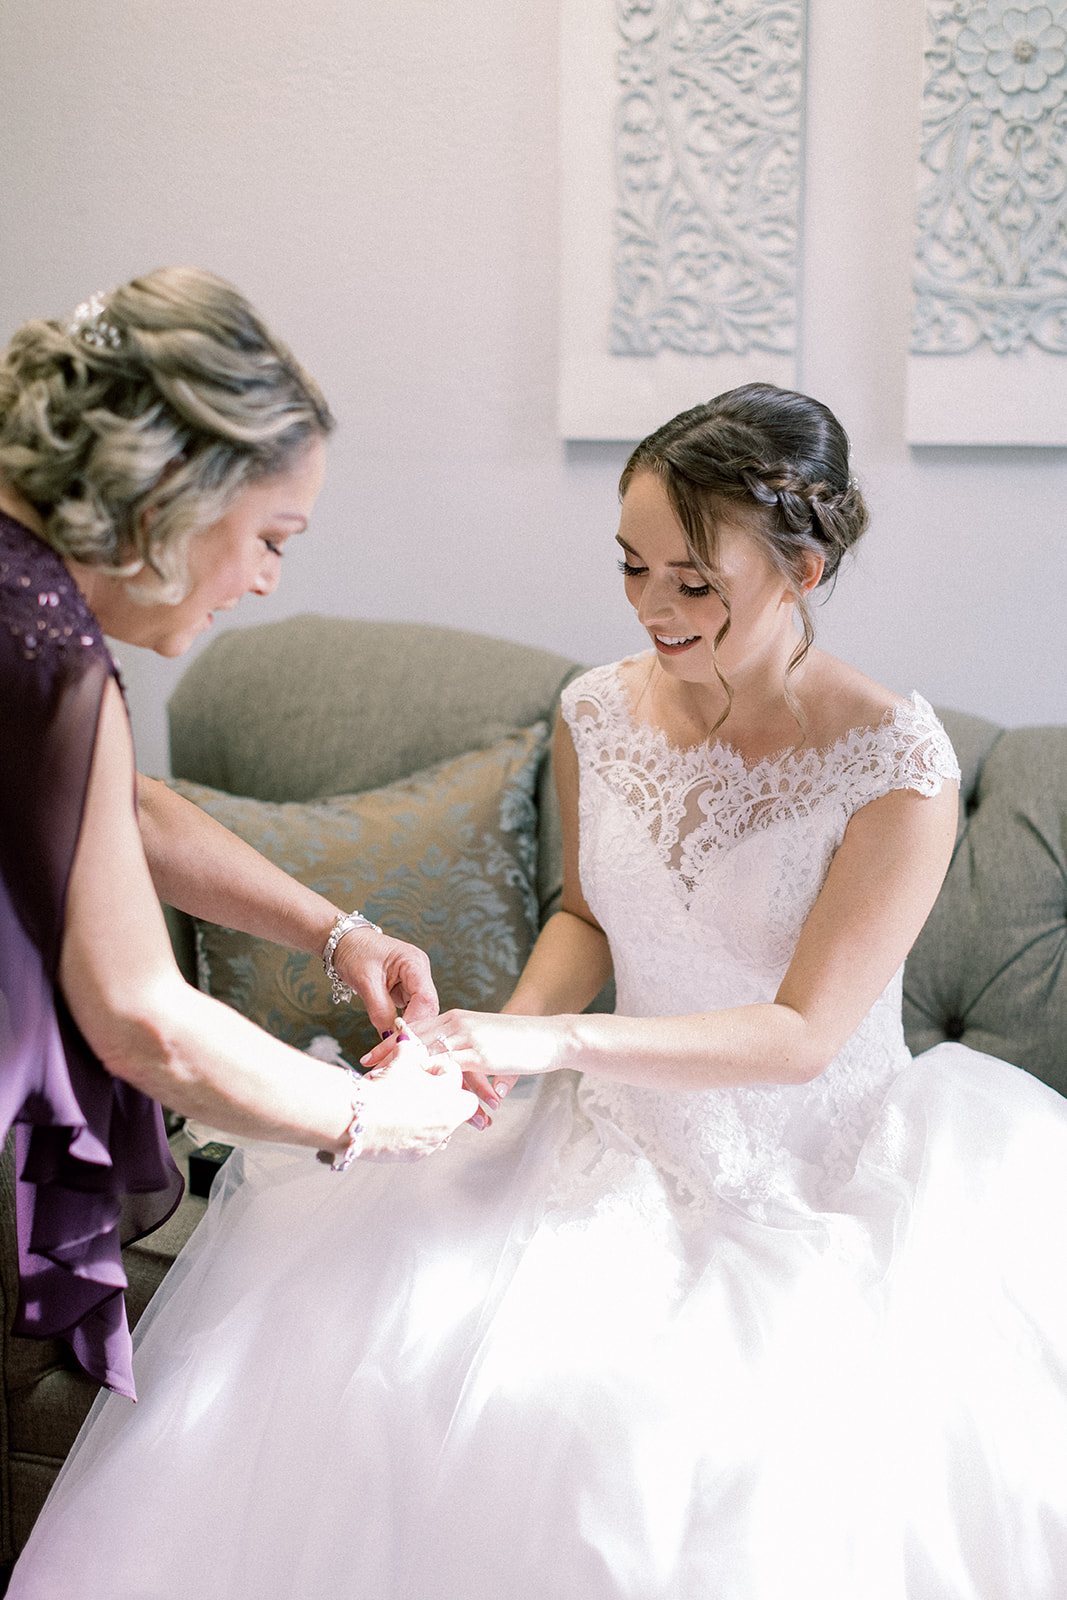 Pennsylvania wedding photographer captures bride getting ready for wedding day